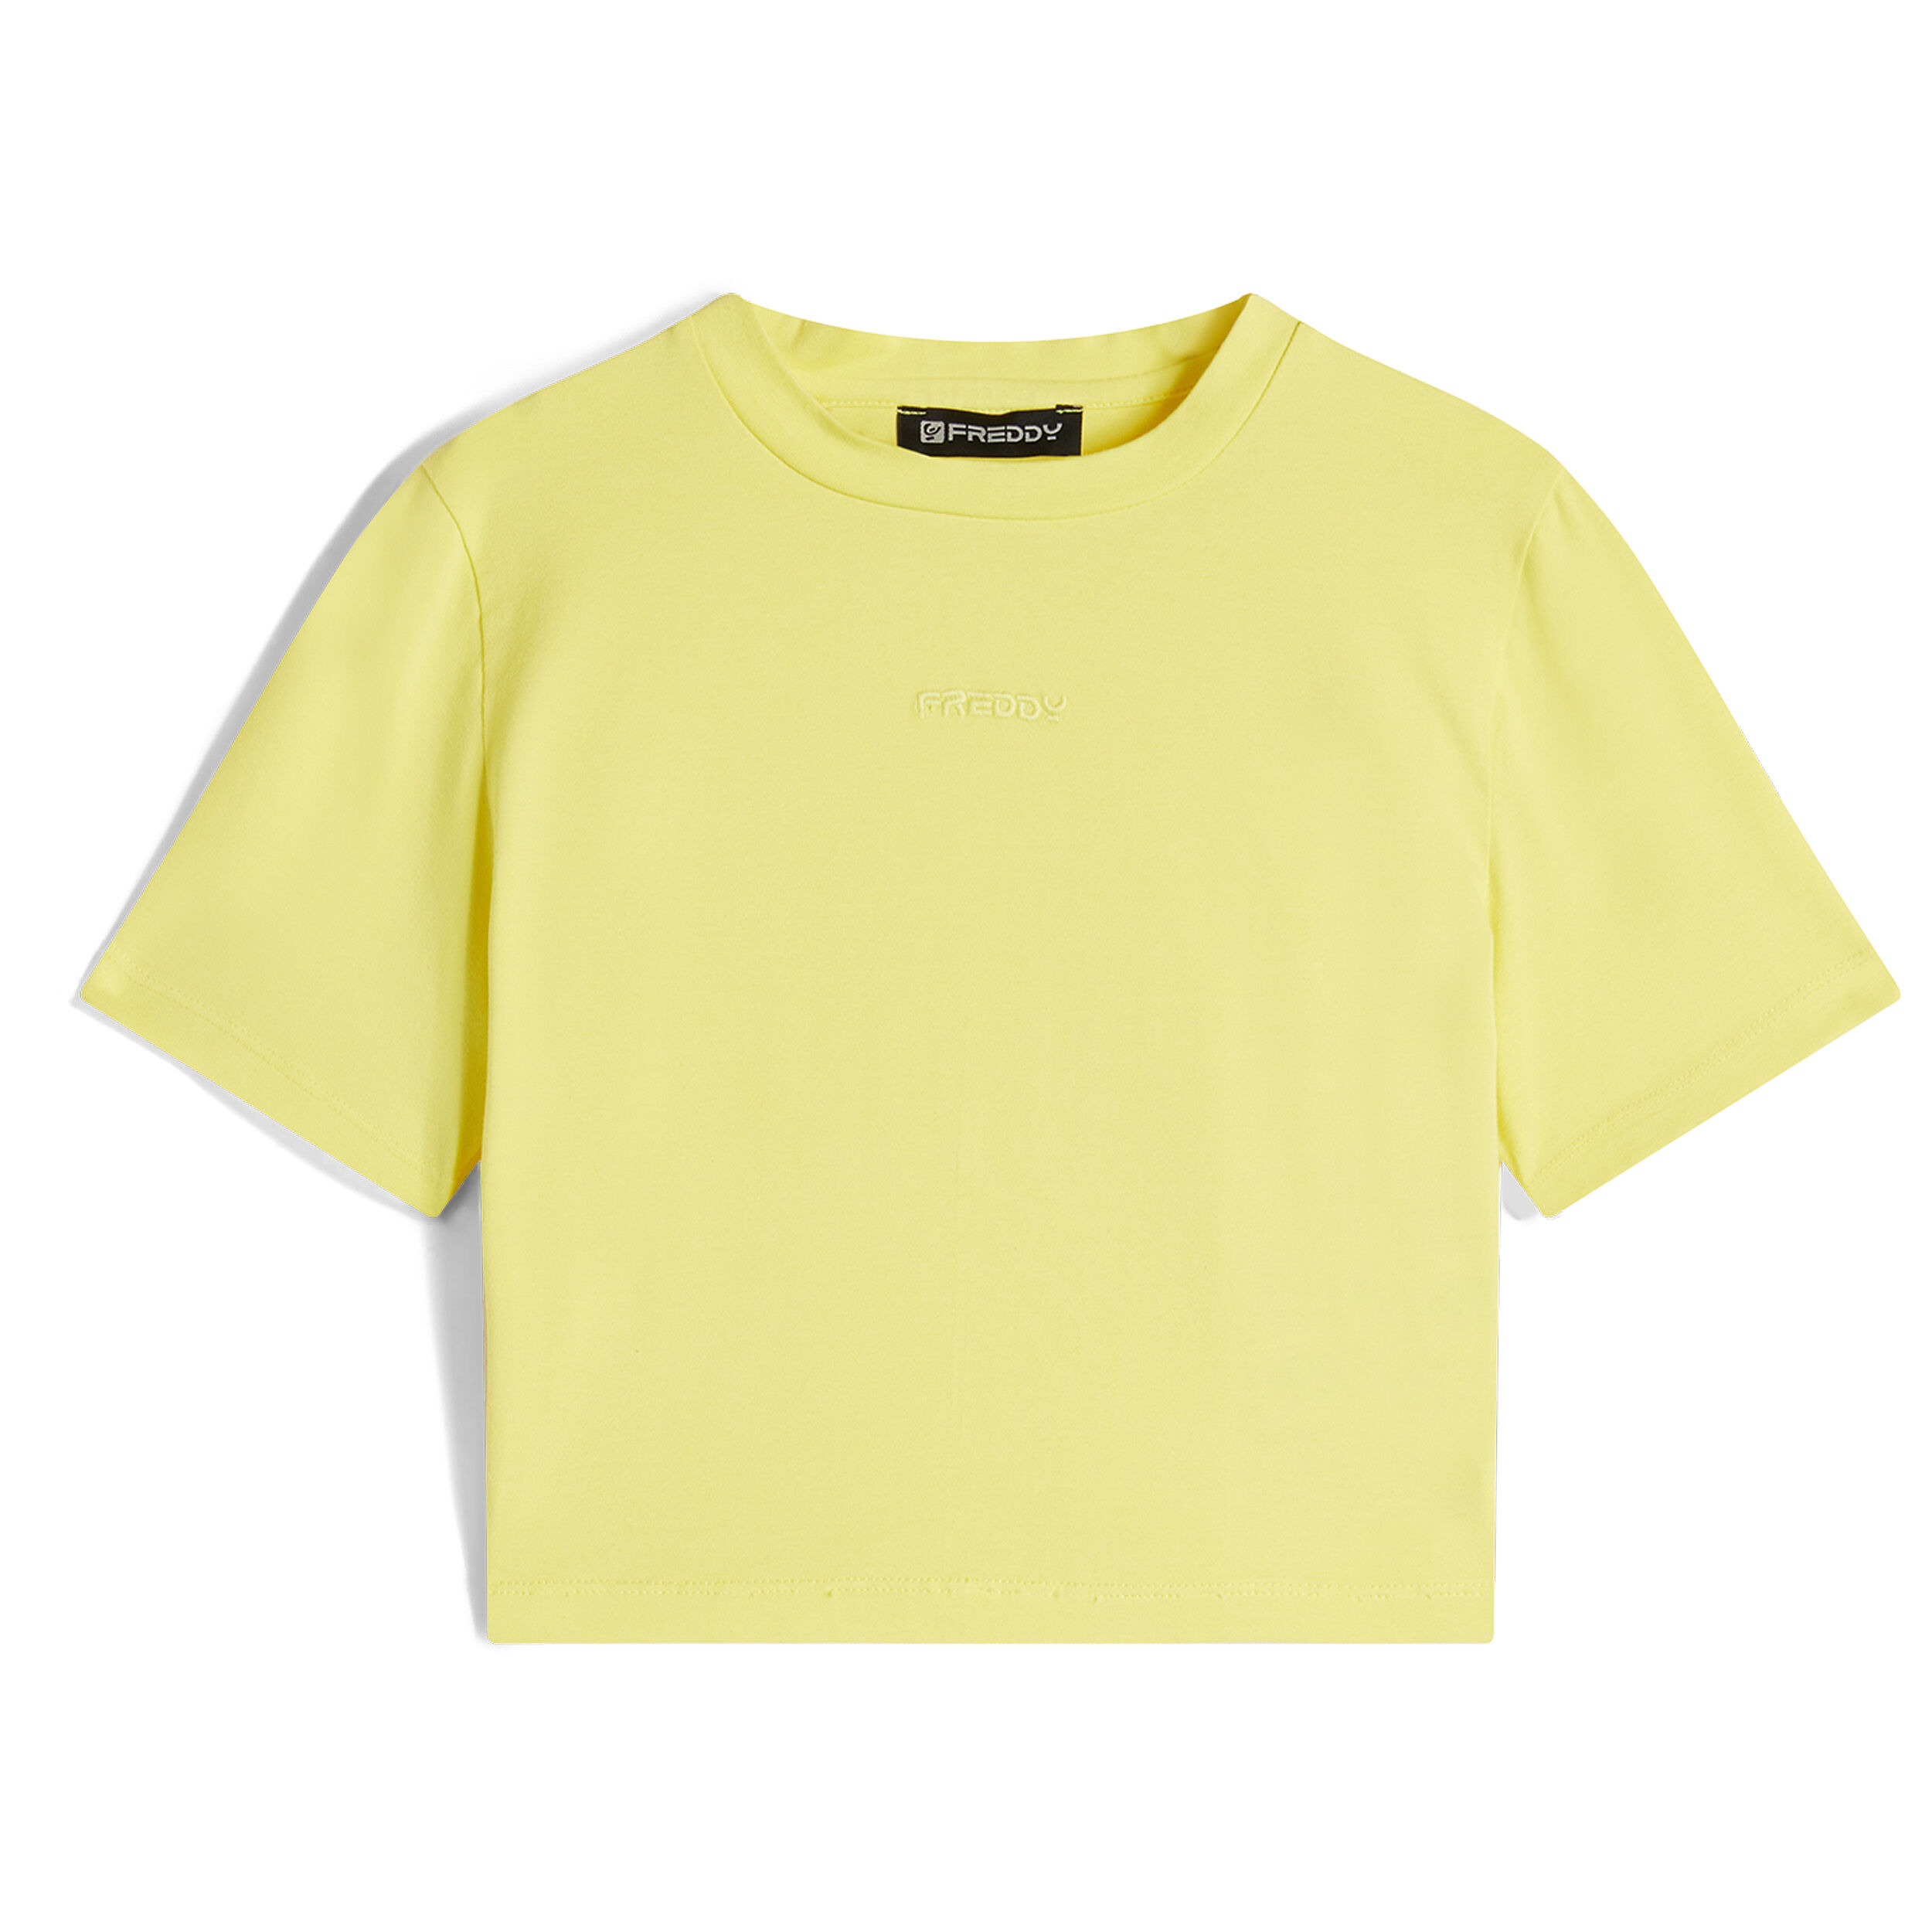 Freddy T-shirt slim fit corta in tessuto jersey tinto capo Celandine Direct Dyed Donna Medium